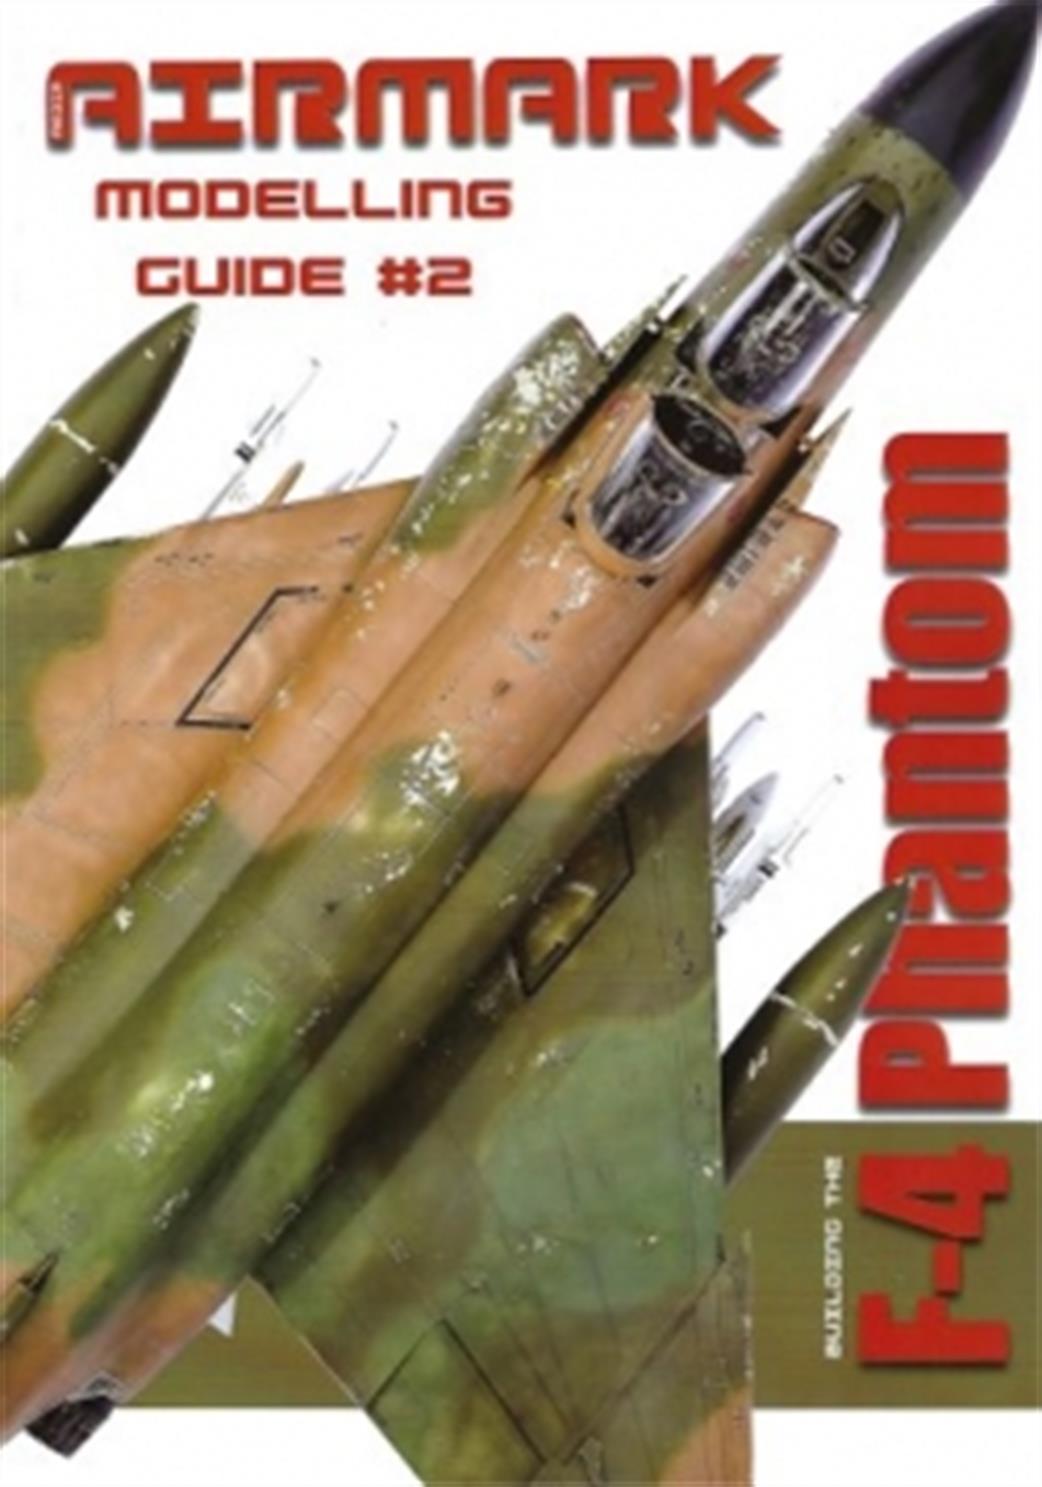 AM2 F-4 Phantom Modelling Guide 2 By Airmark Media